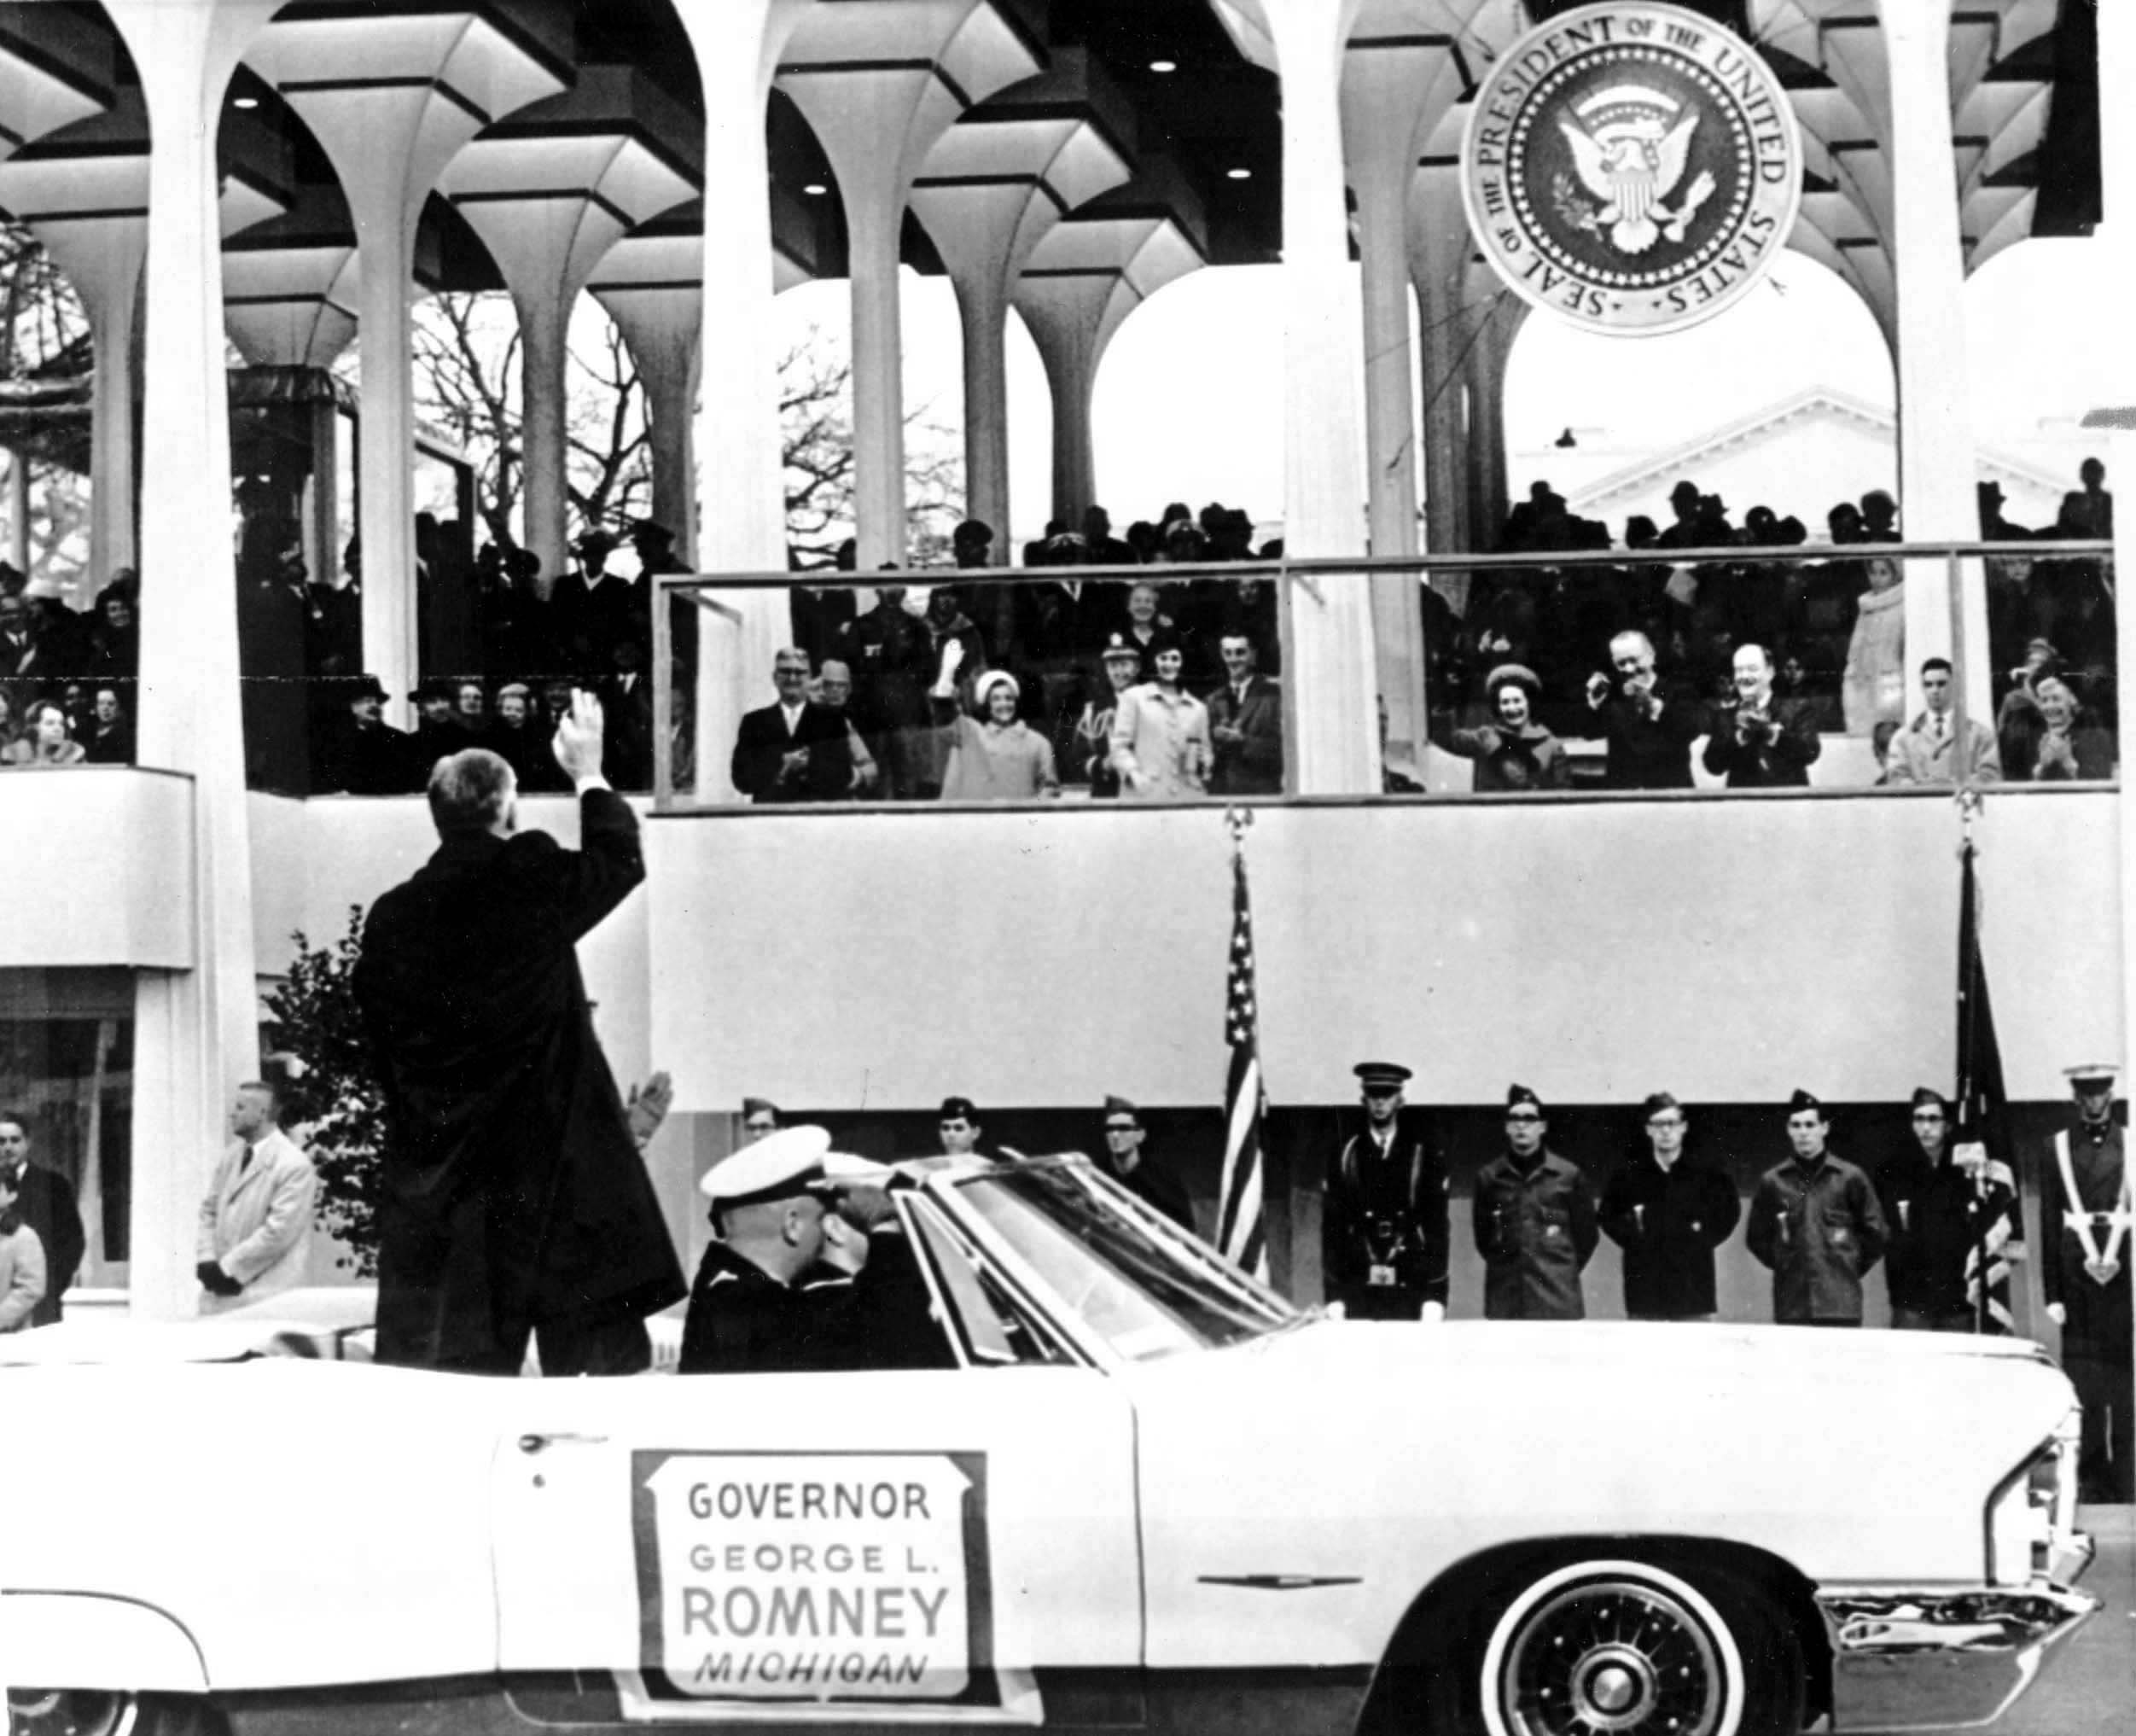 <img src="George Romney.jpg" alt="Romney Lyndon Johnson inauguration" />